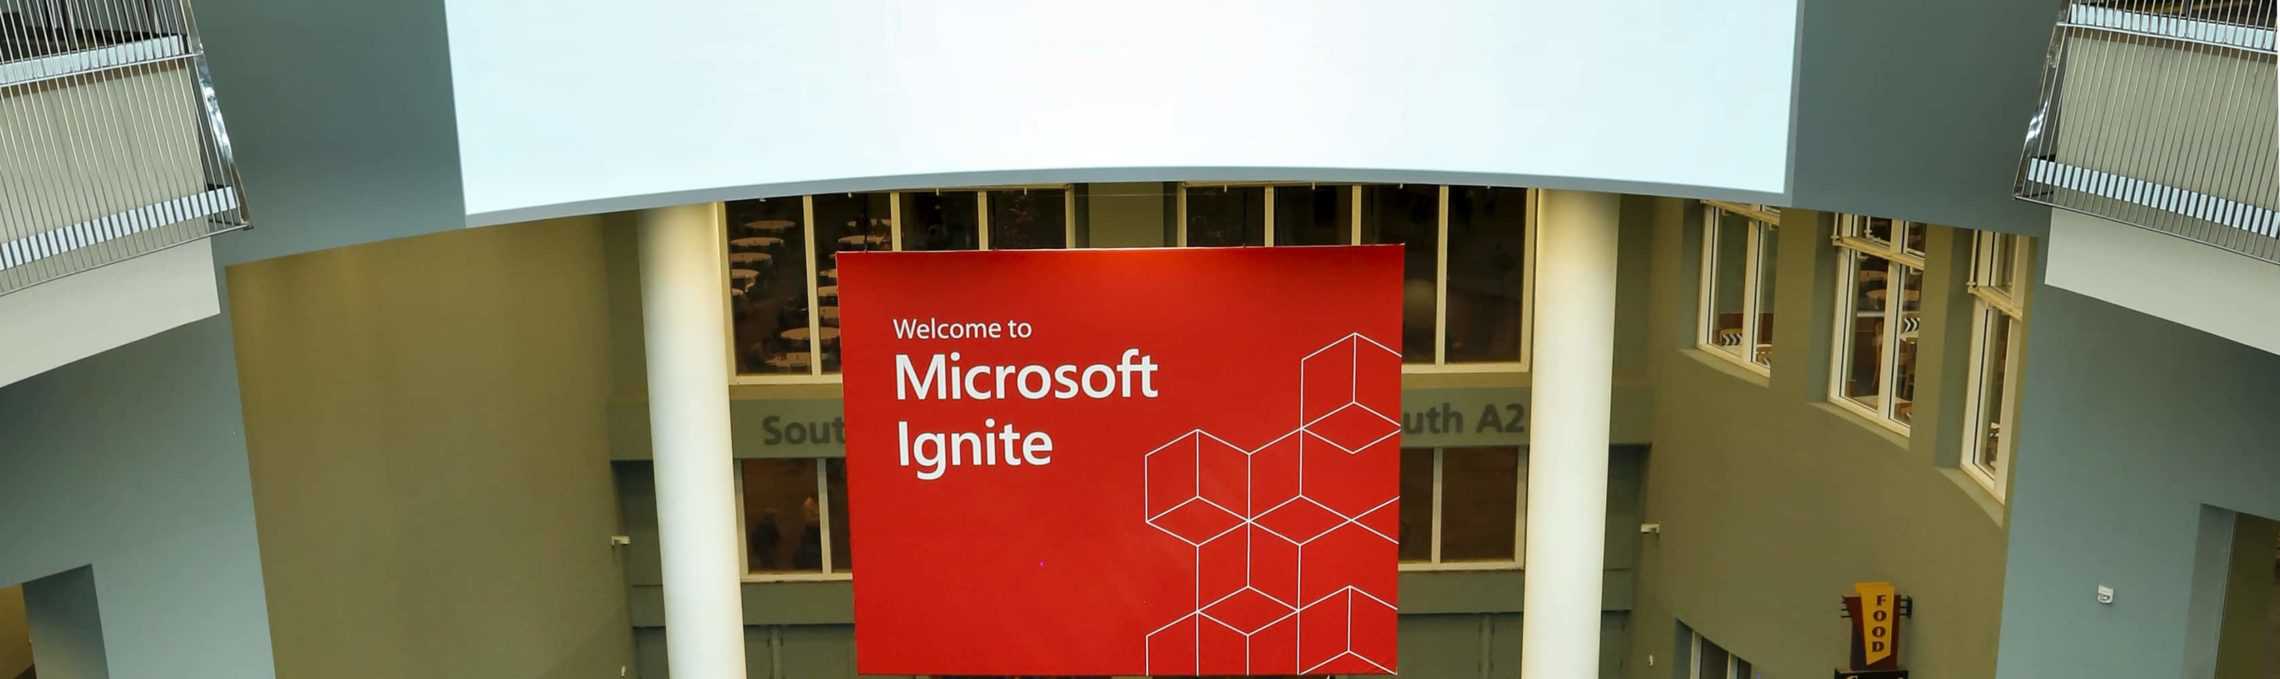 Entrance to Microsoft Ignite in September 2018 at Orlando, Florida